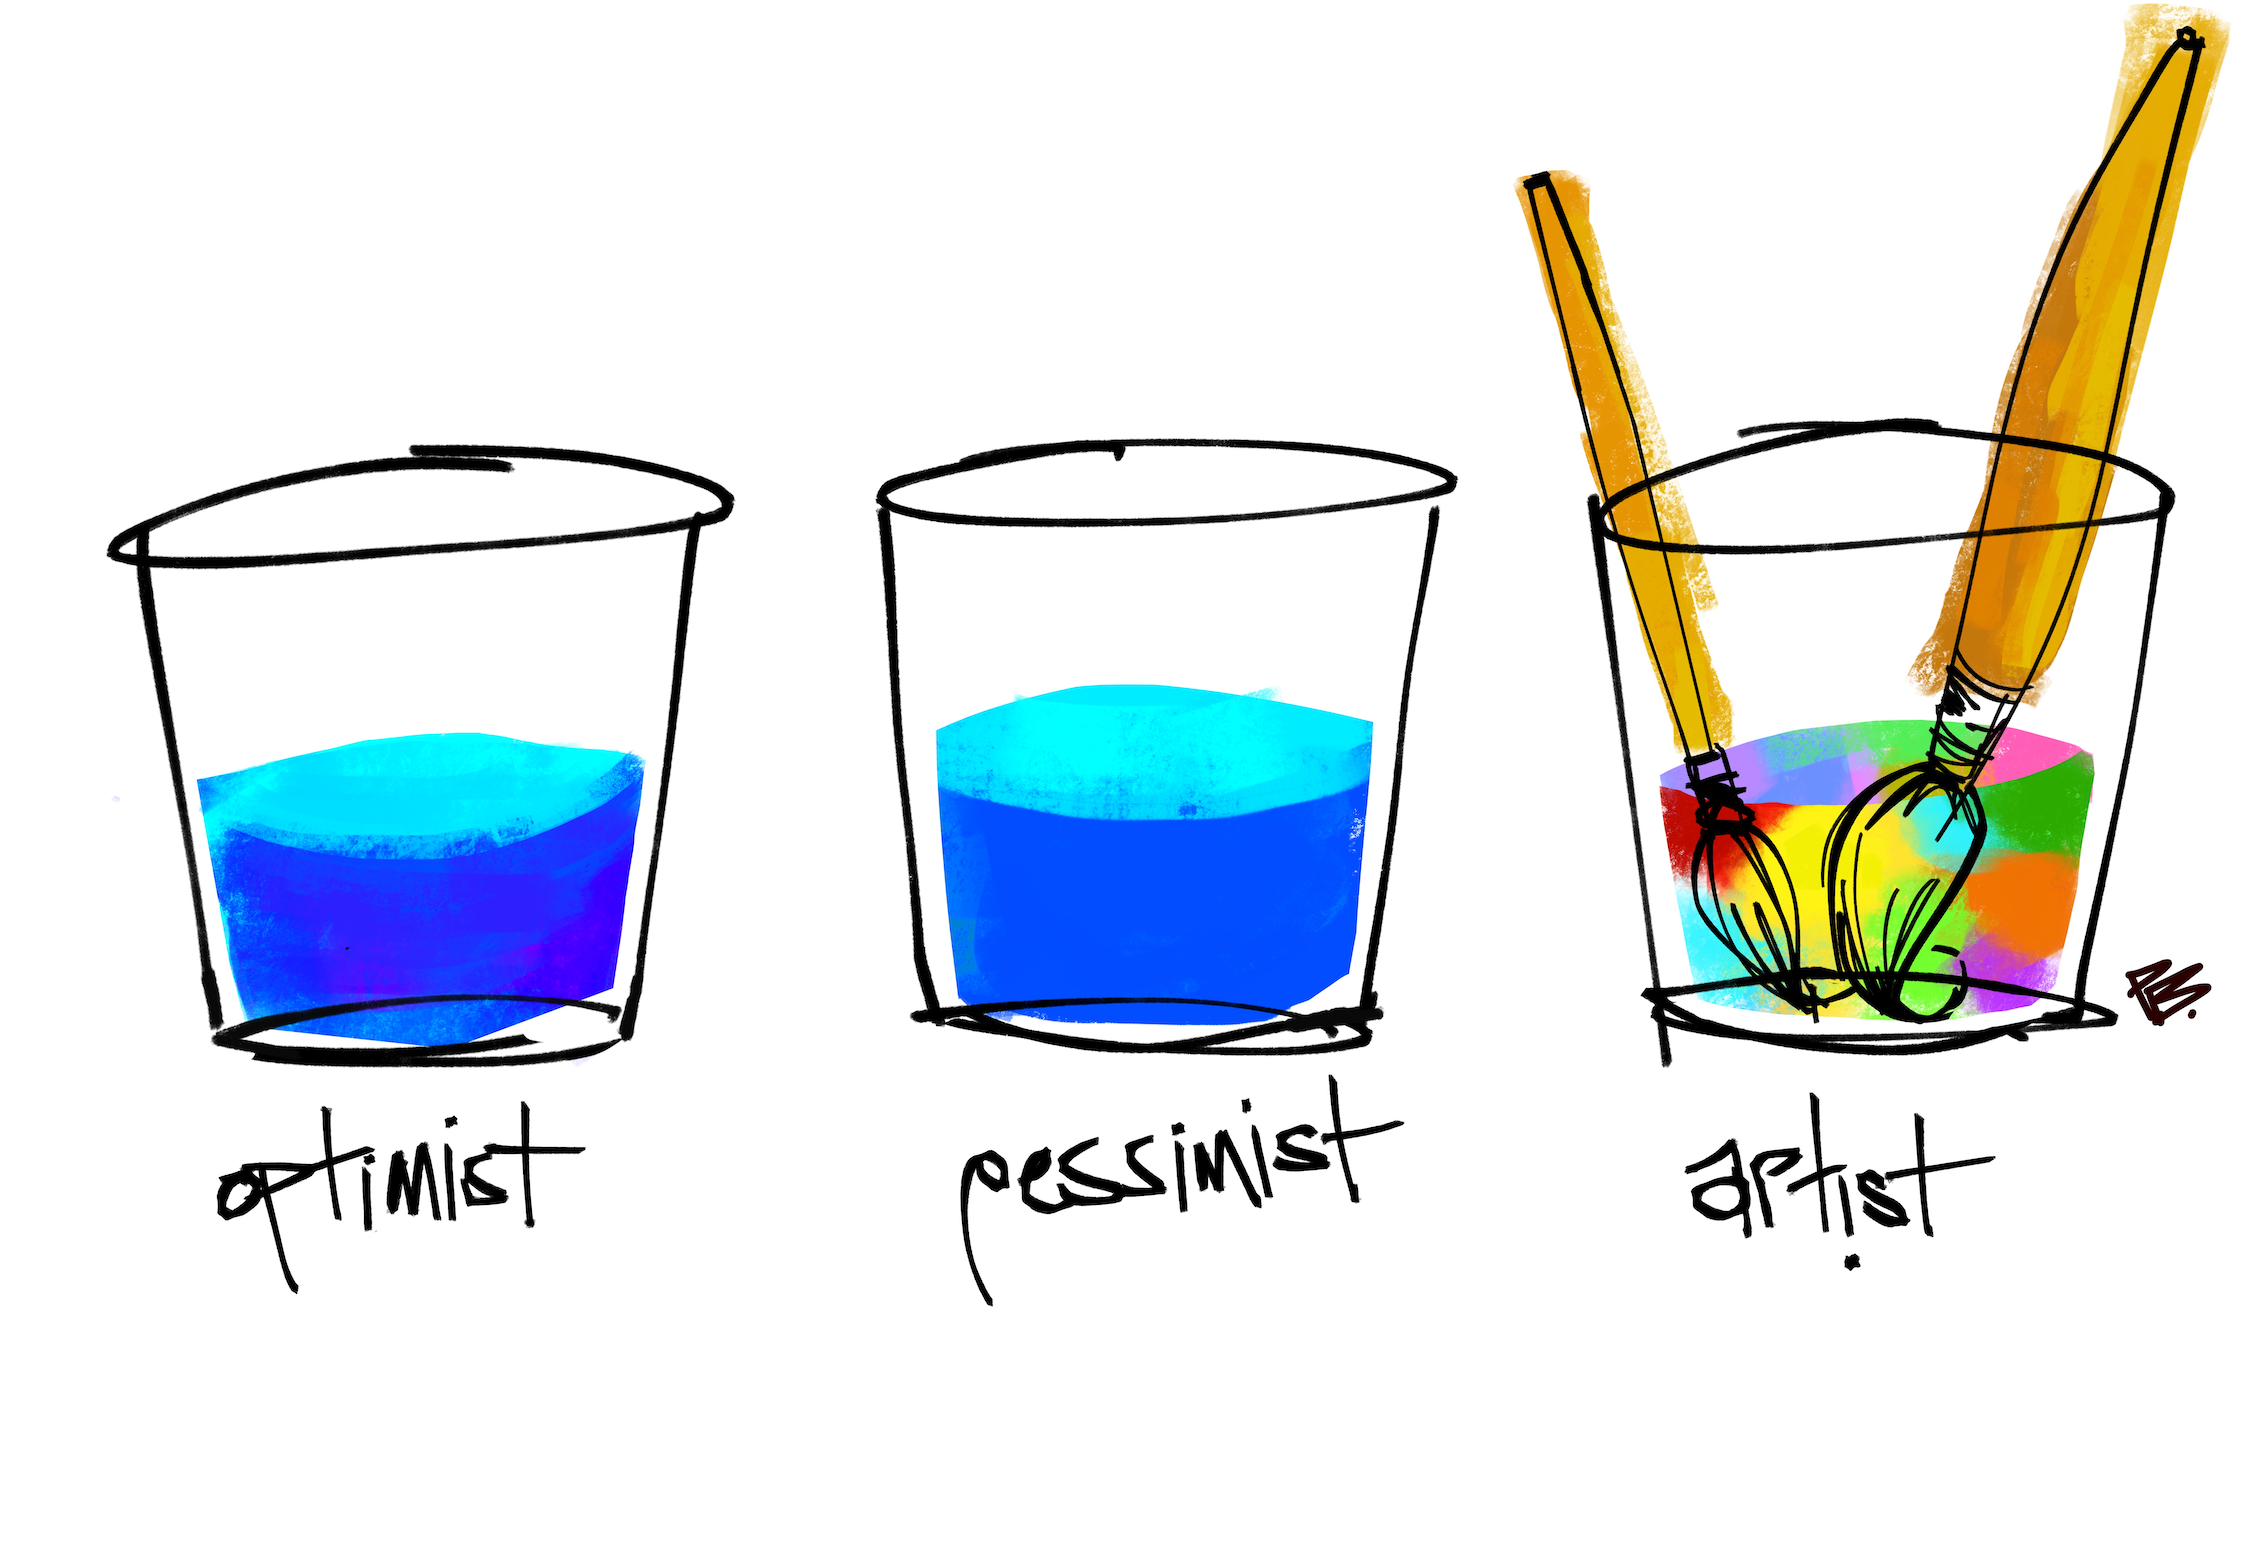 Optimist. Pessimist. Artist. Short-Sleeve Unisex T-Shirt Illustration by pierre bennu